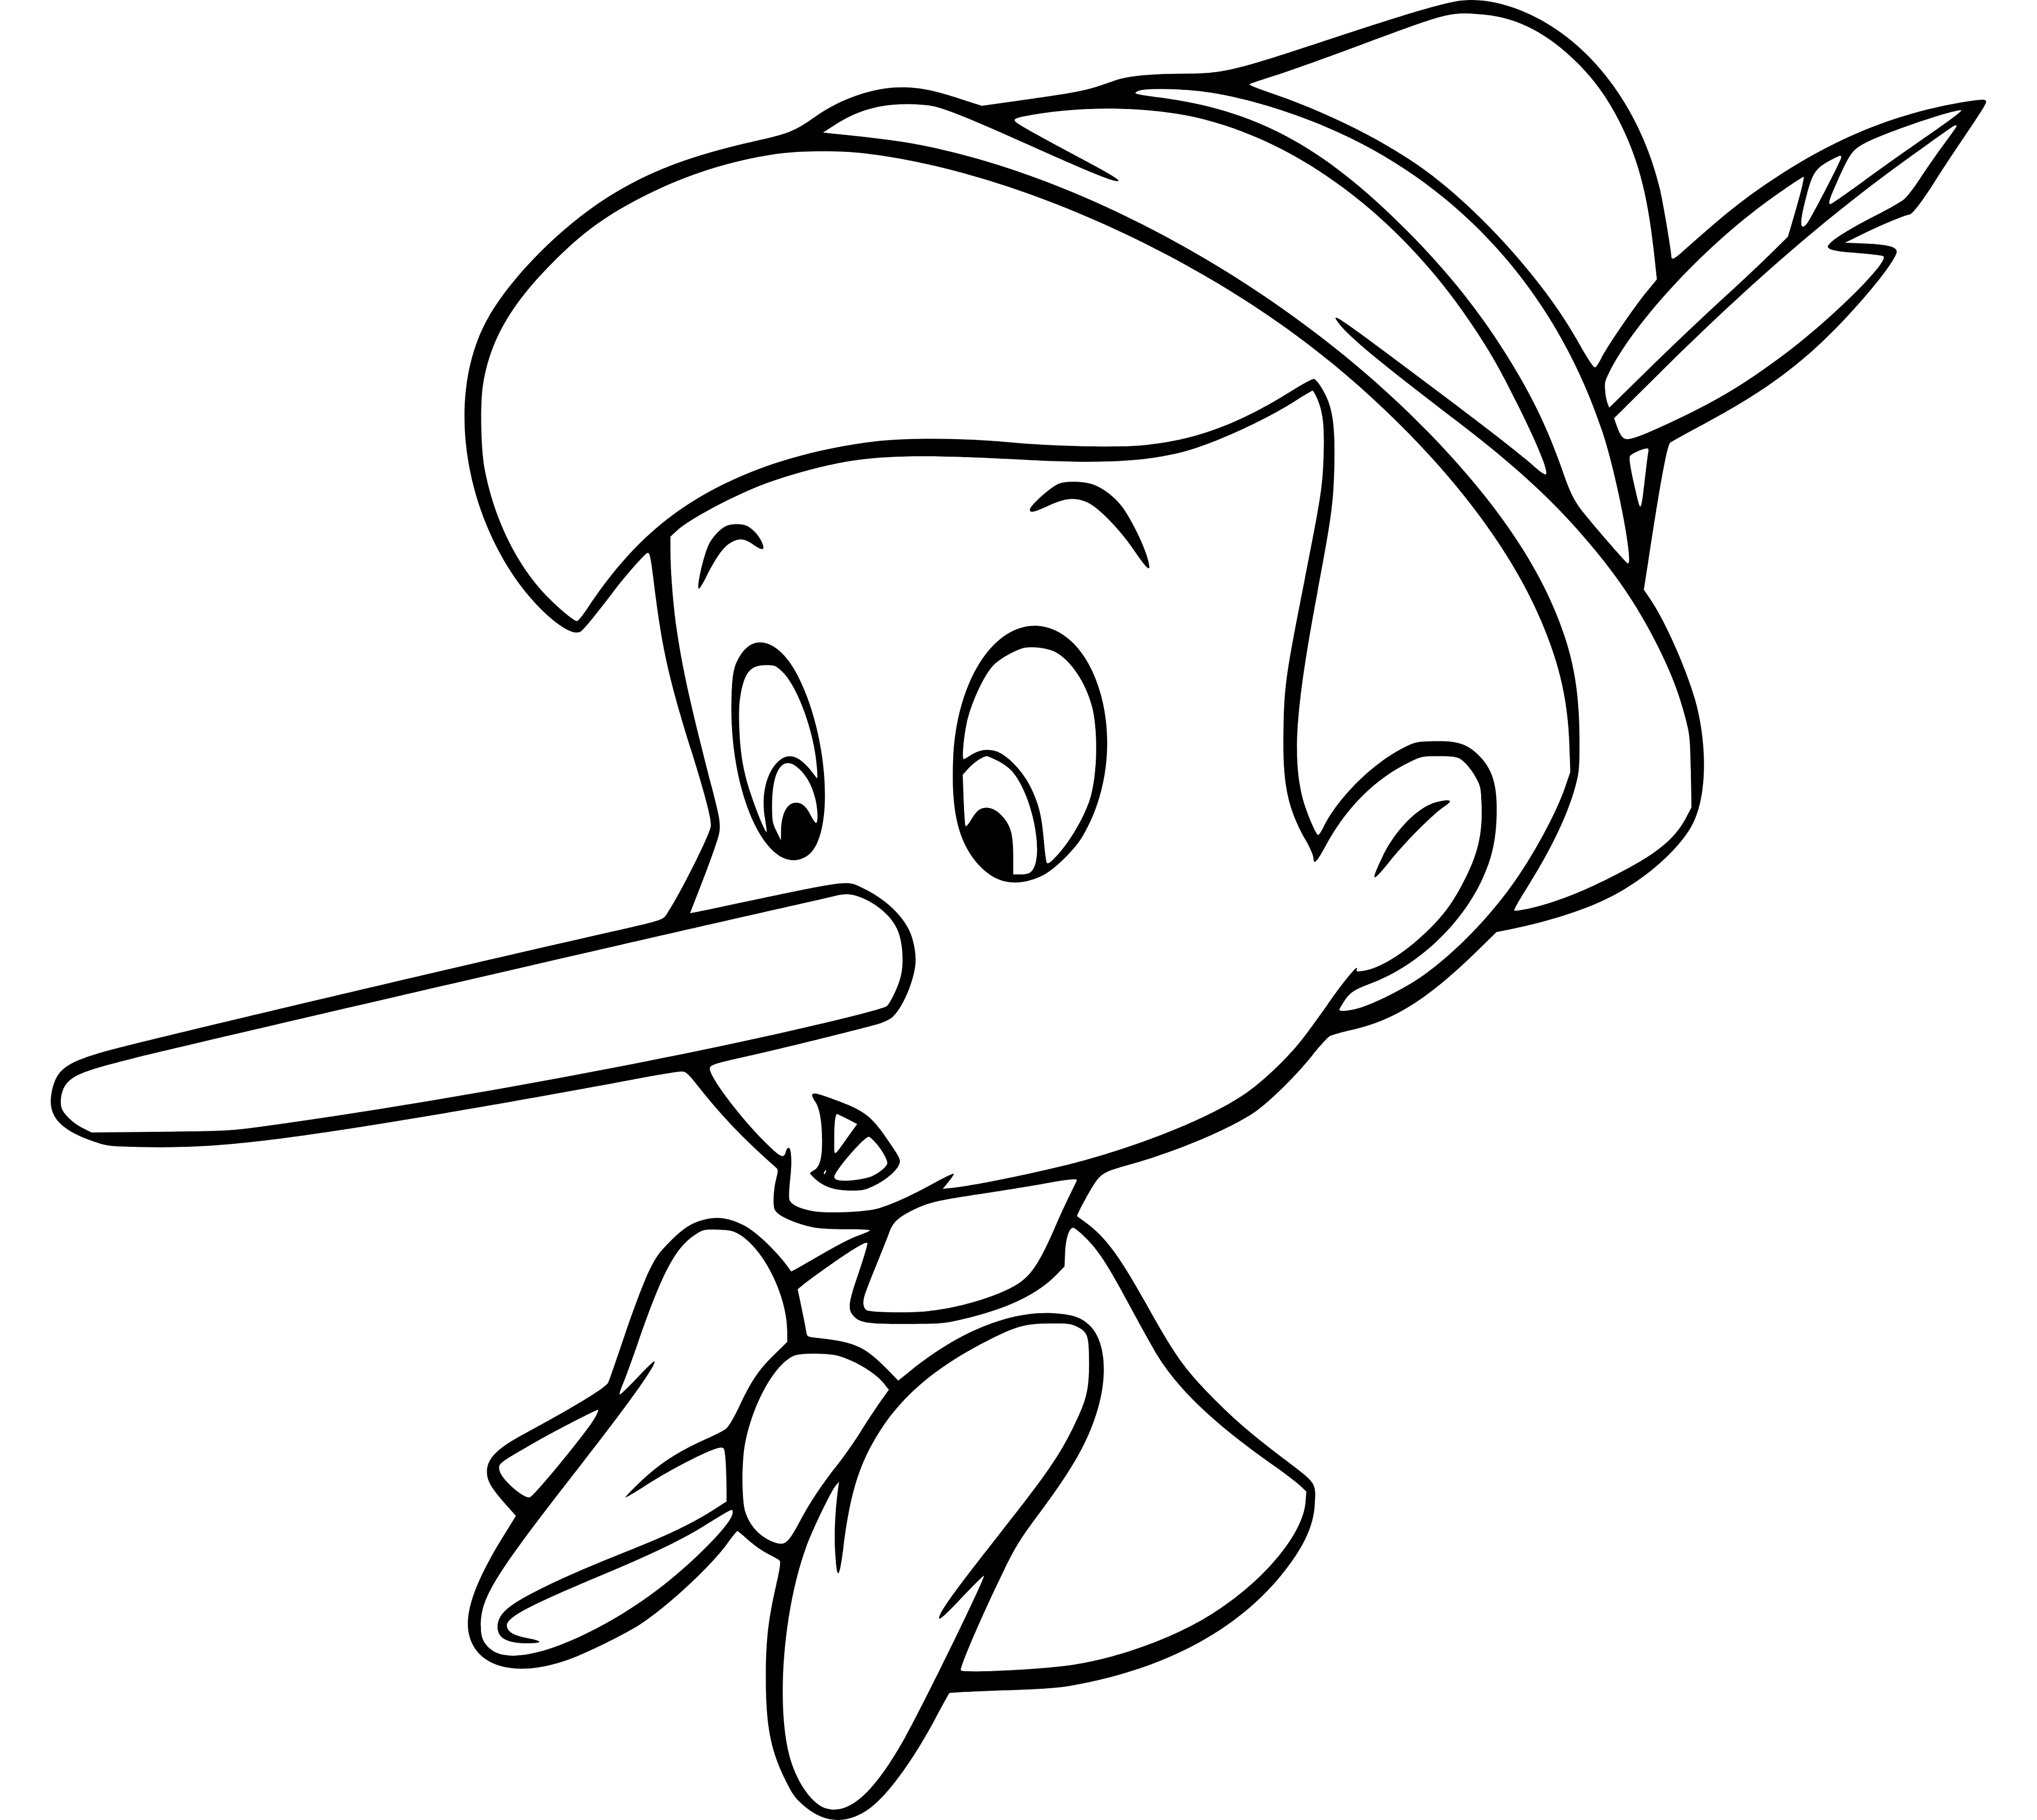 Pinocchio Nose Growing Coloring Page - SheetalColor.com